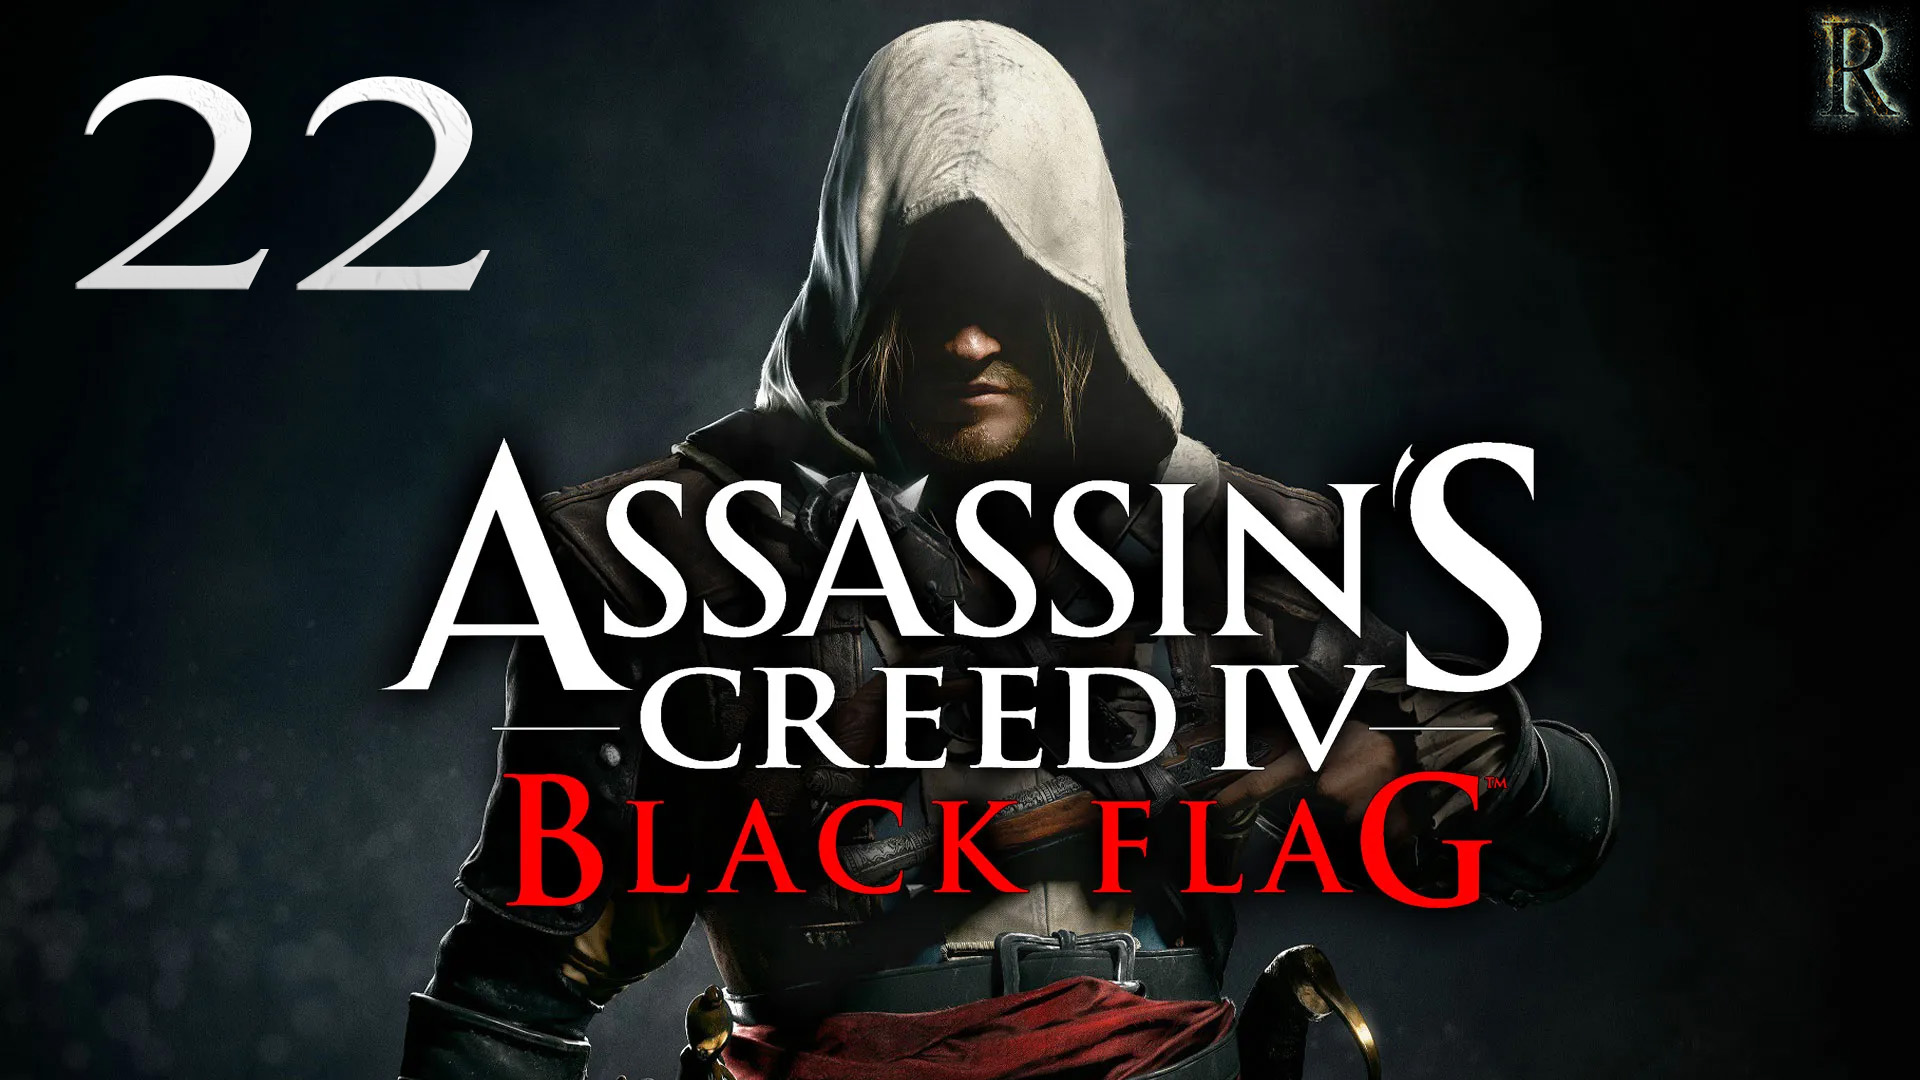 Assassin's Creed IV Black Flag -  22 серия. (Все дозволено / Конец губернатору / Сбор бутылок)